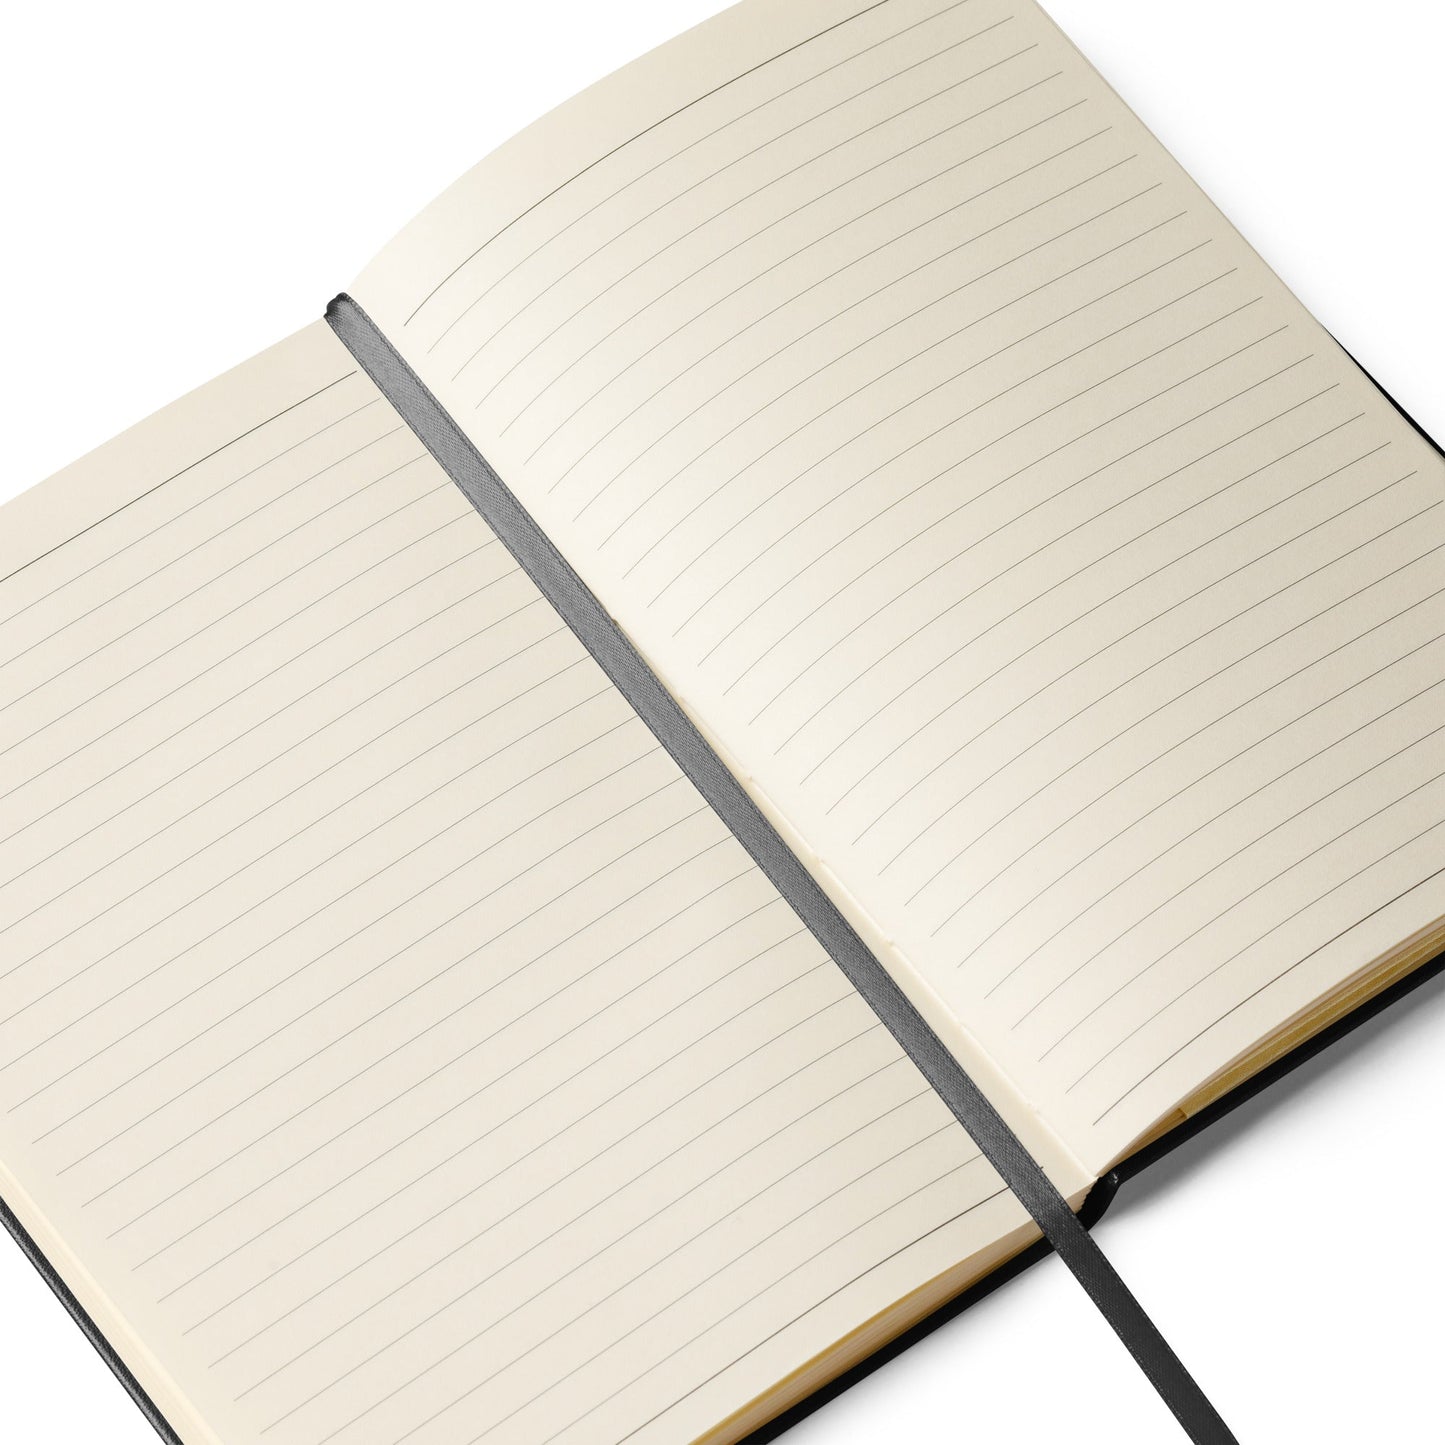 Scrapbook Hardcover Bound Notebook - A Creative Journey Awaits